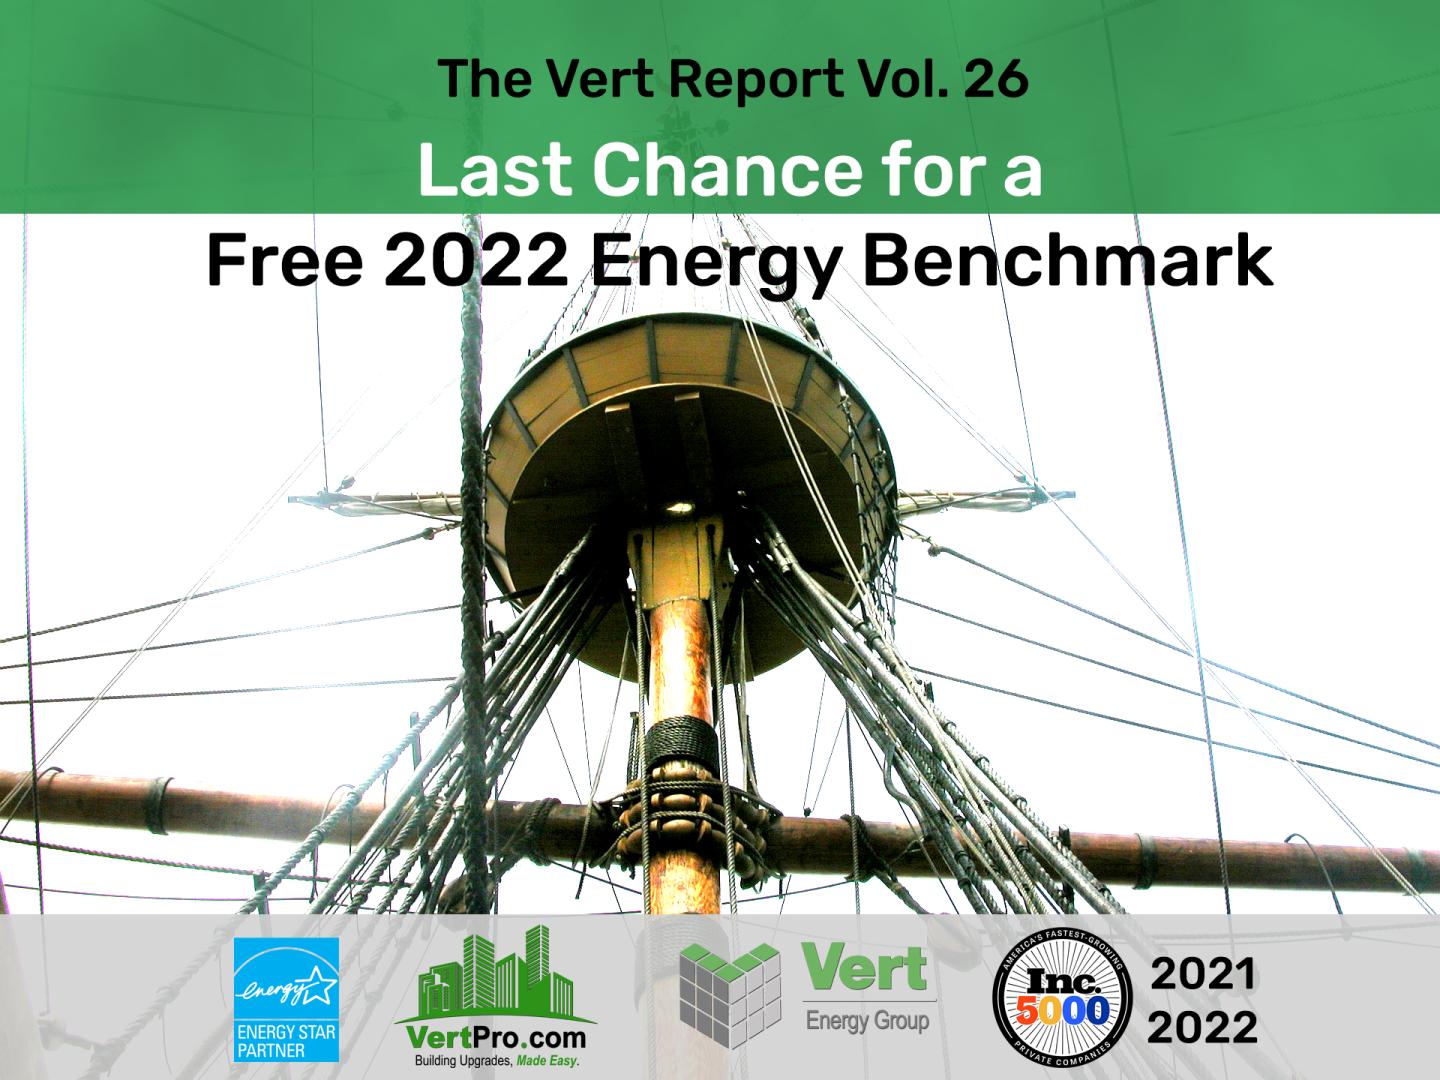 Energy Benchmark for 2022 compliance